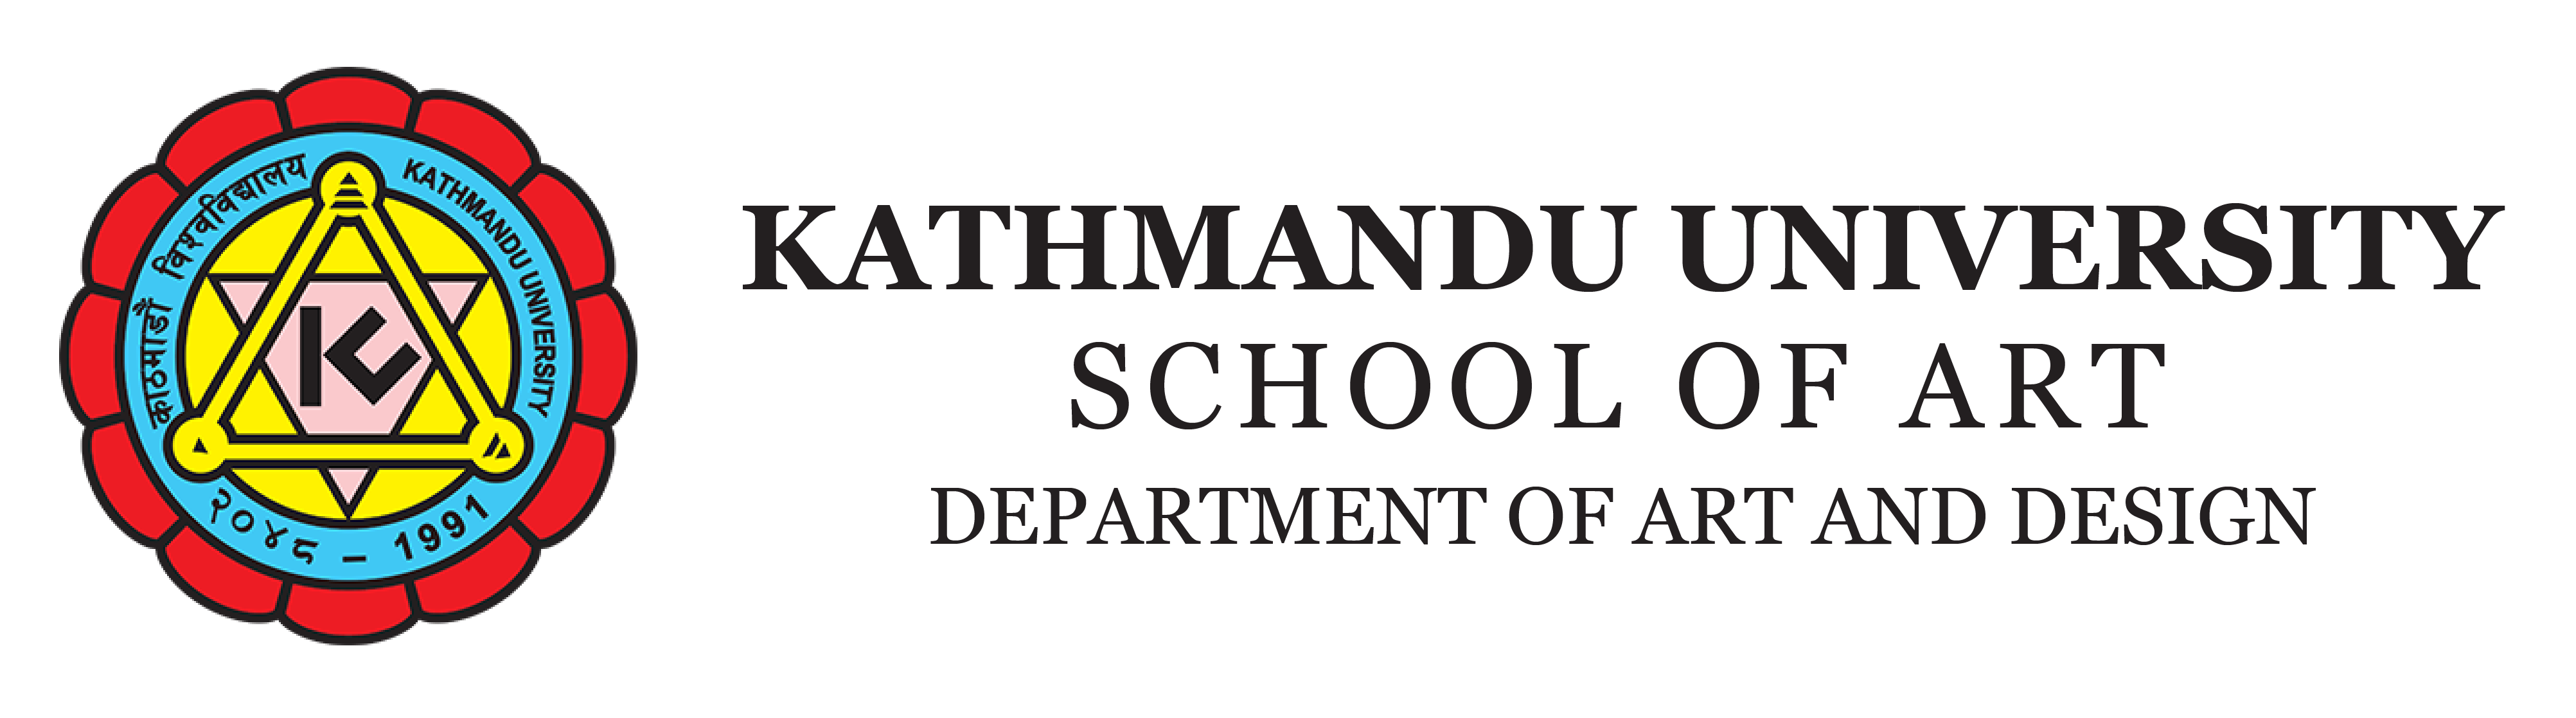 Kathmandu University
School of Arts, Department of Art and Design